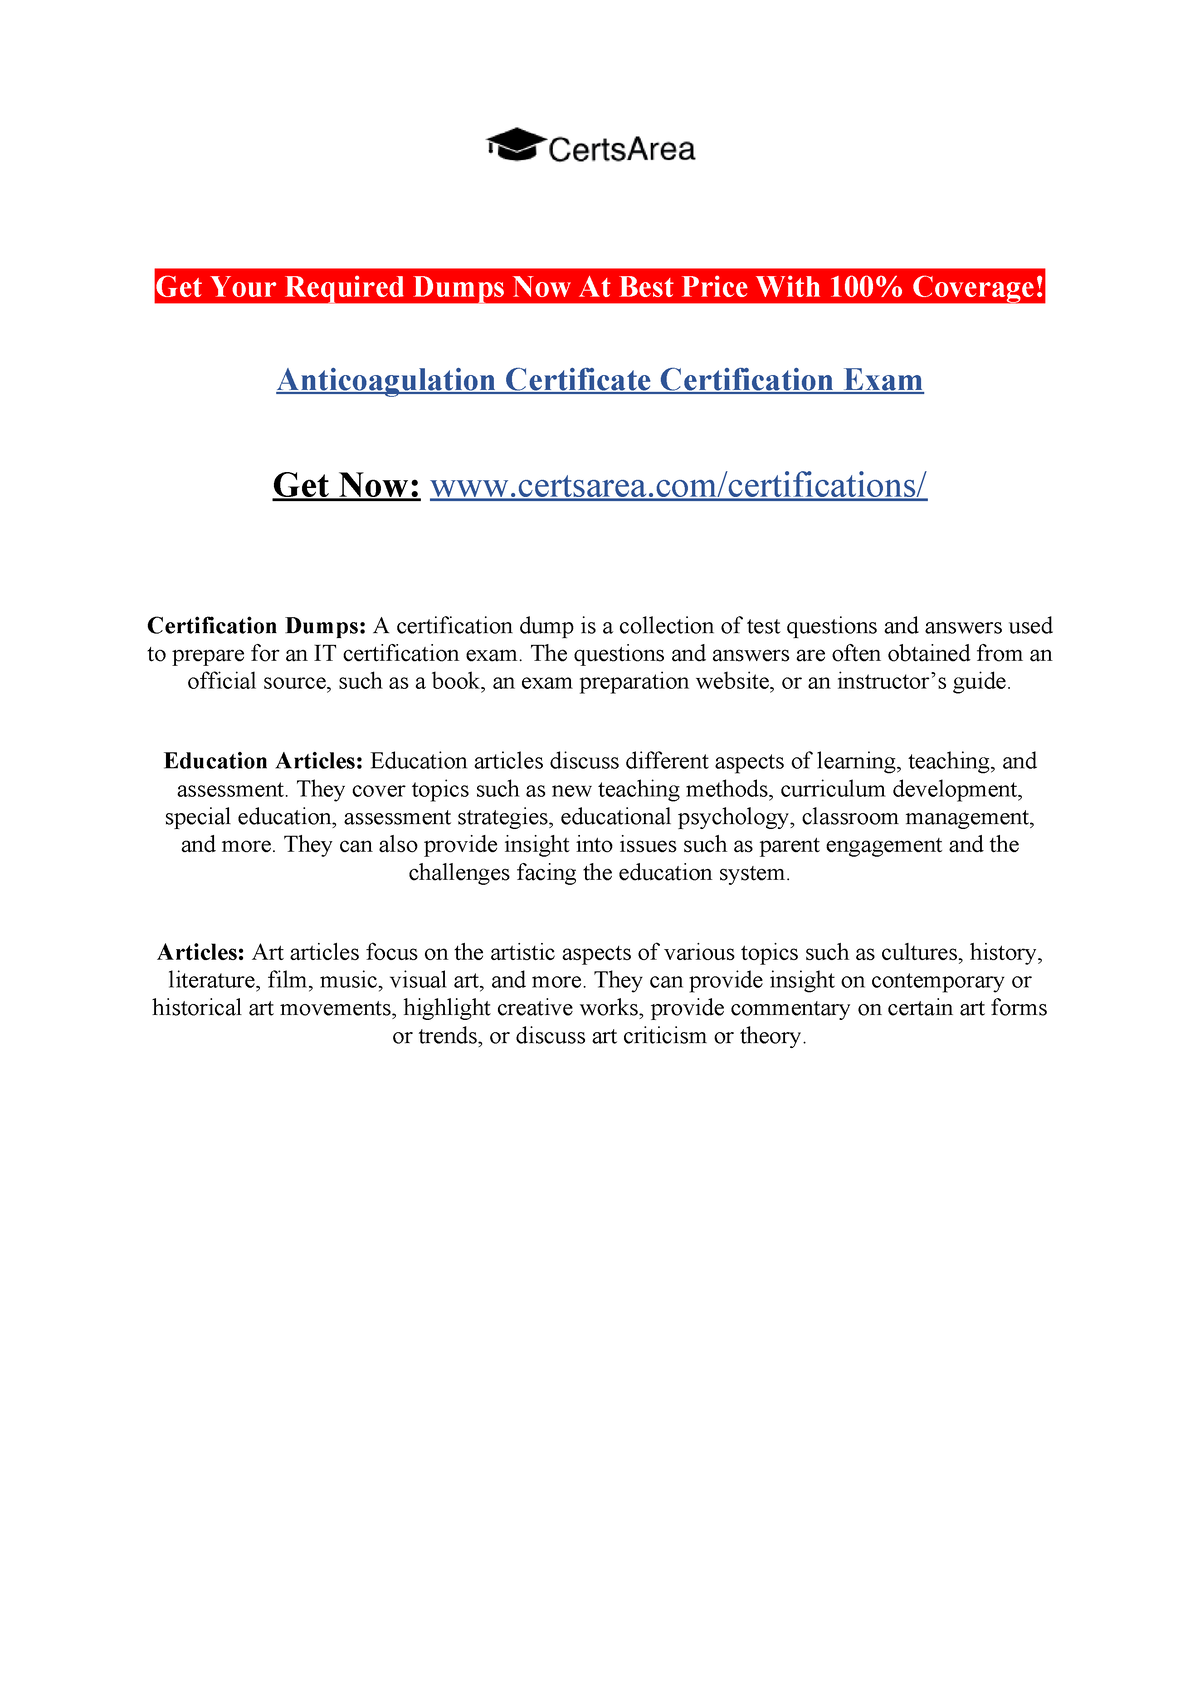 Anticoagulation Certificate Certification Exam Get Your Required